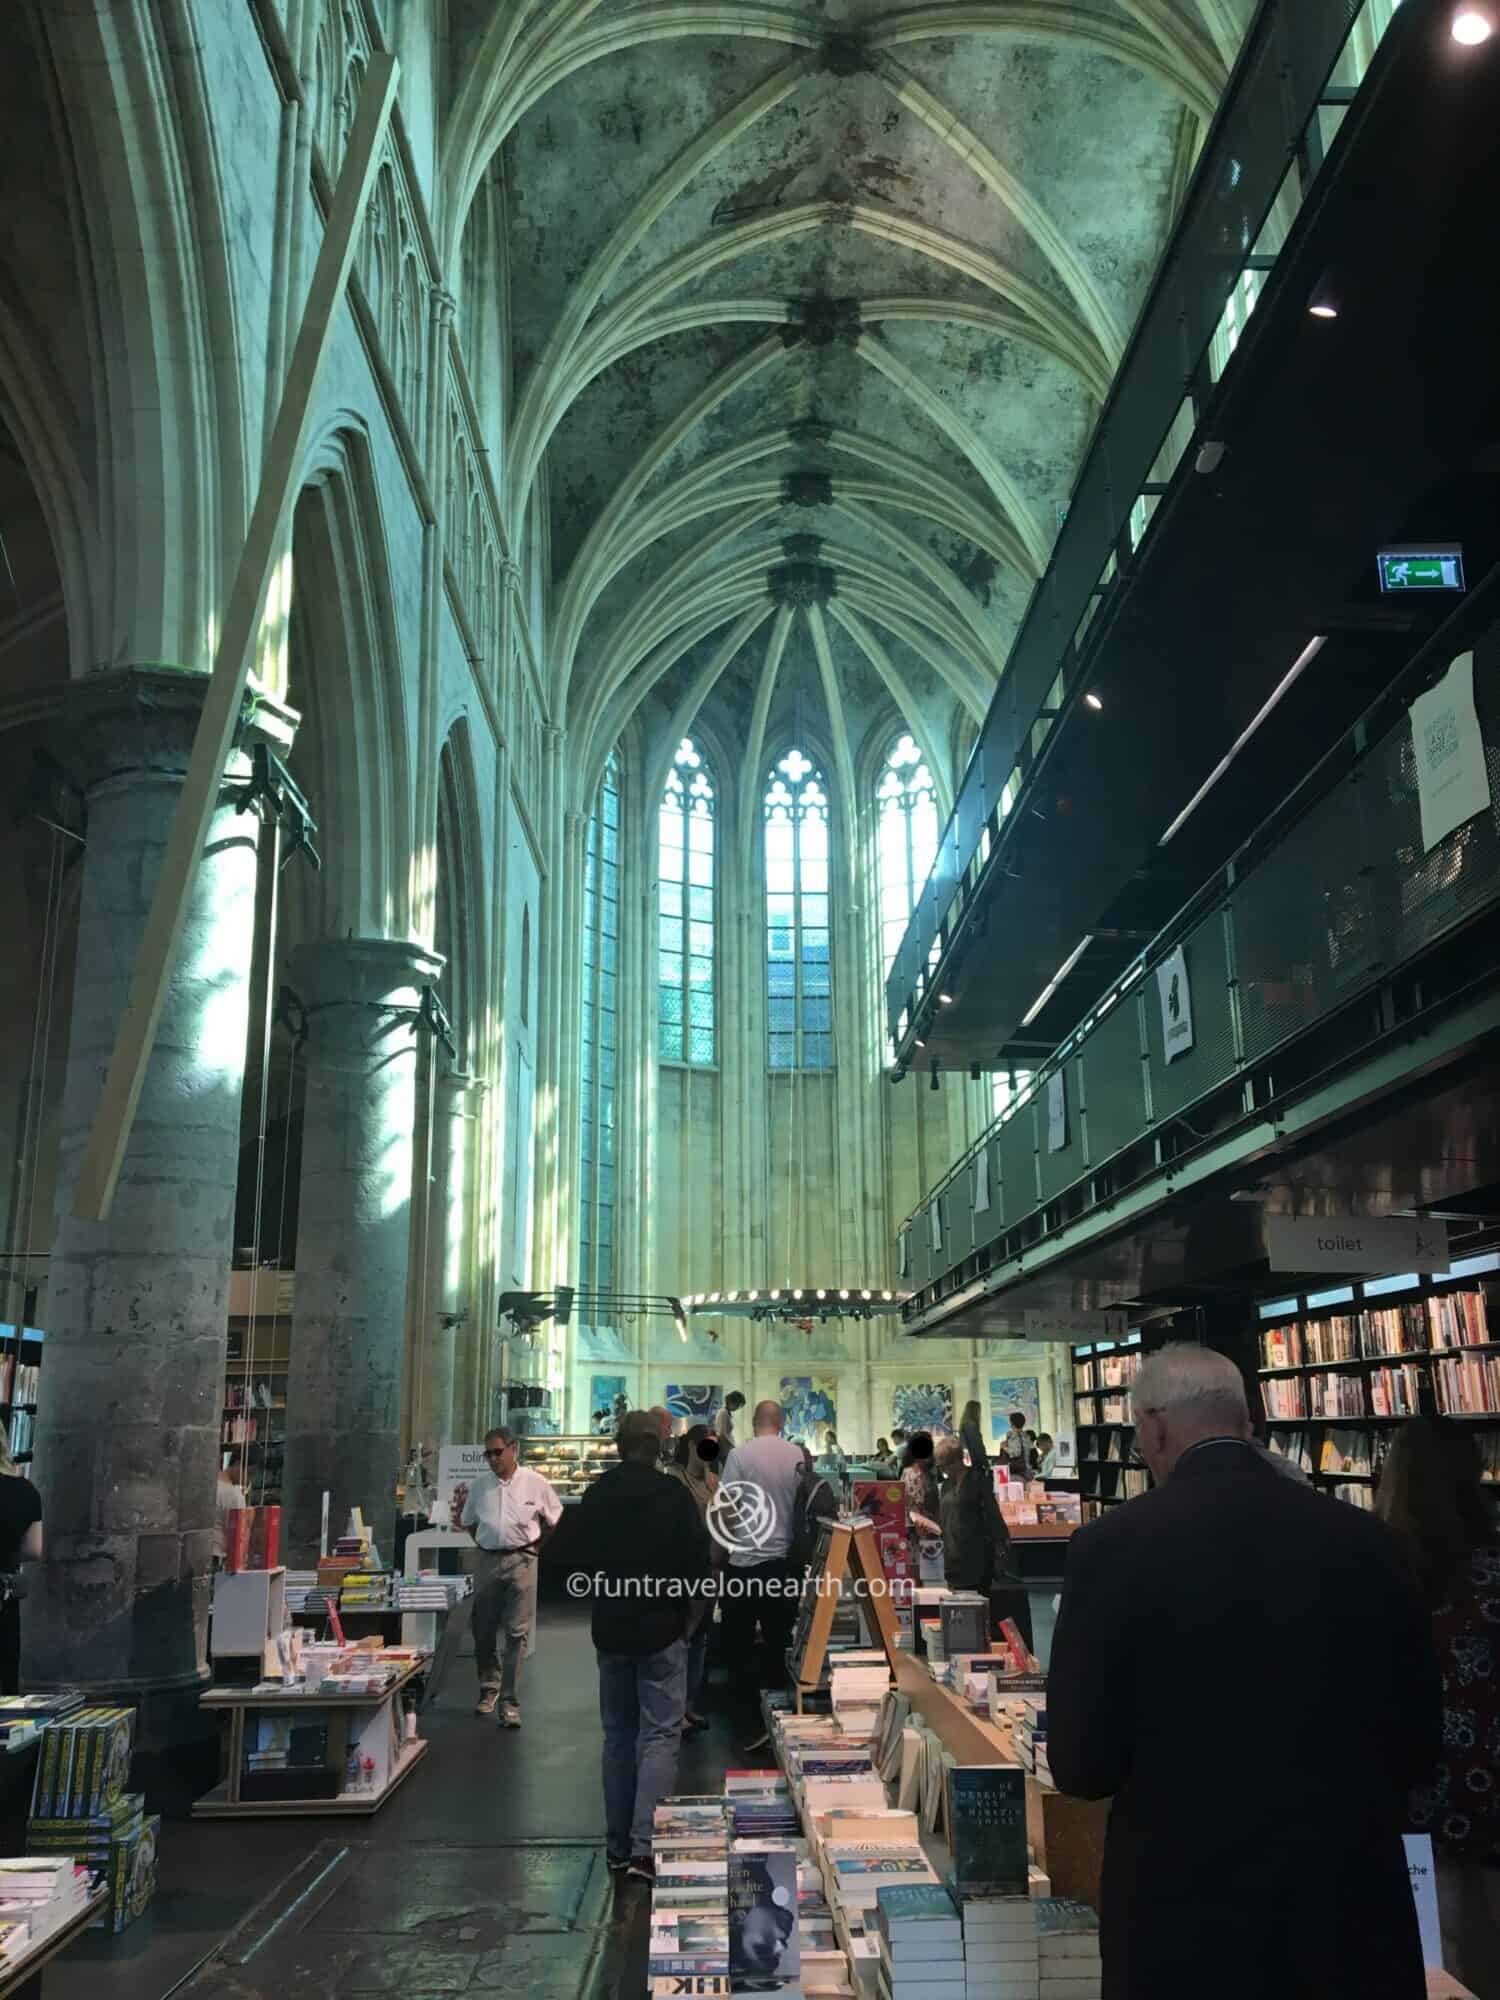 Book Store Dominicanen,Maastricht, Netherlands